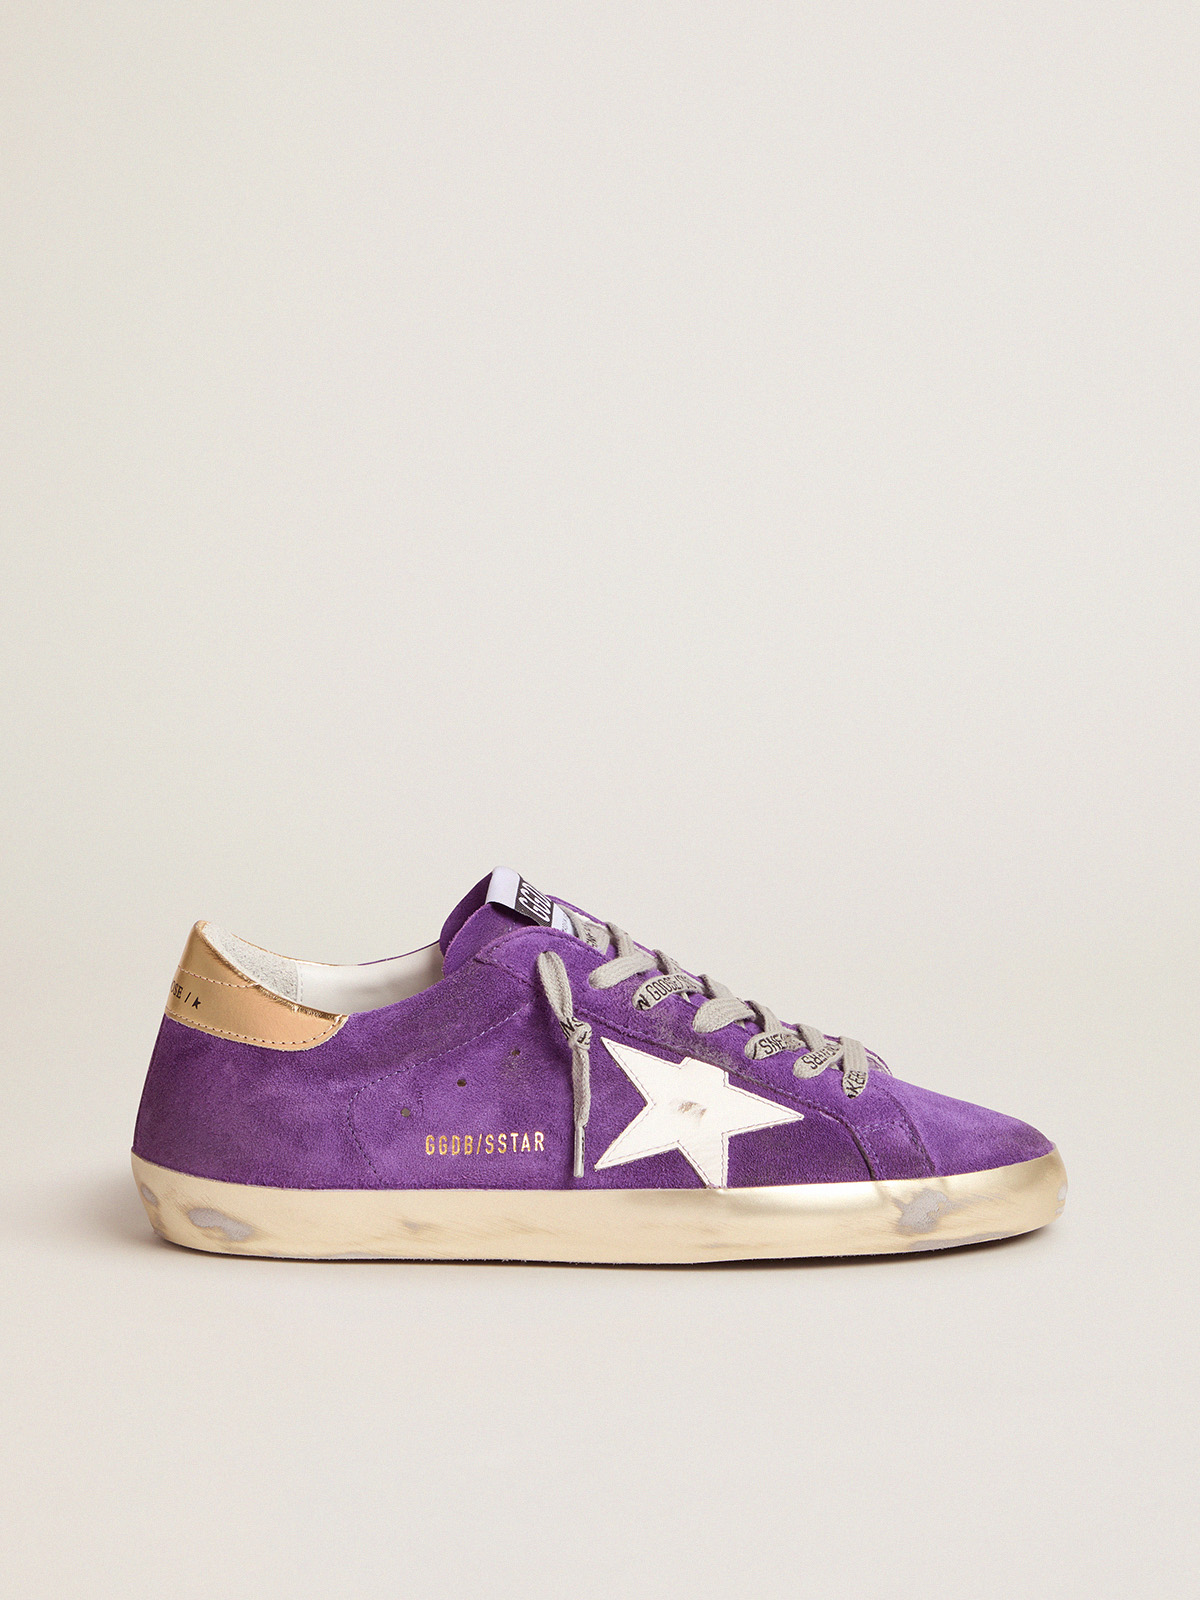 Purple suede Super-Star sneakers with gold heel tab | Golden Goose